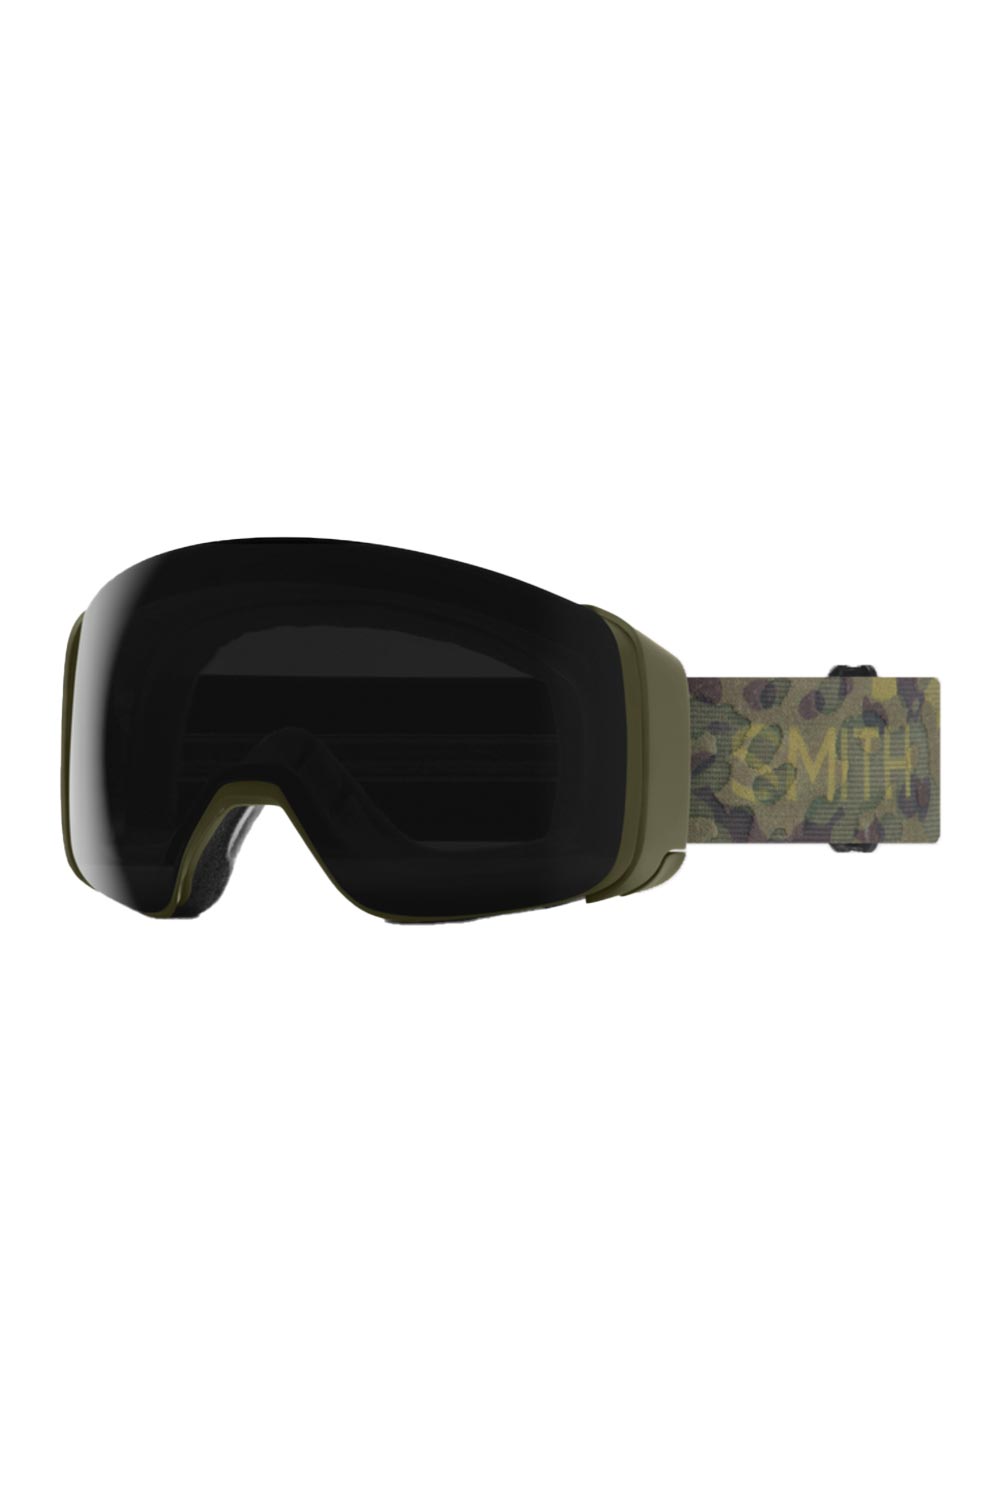 Smith ski/snowboard goggles, camo strap, black lens